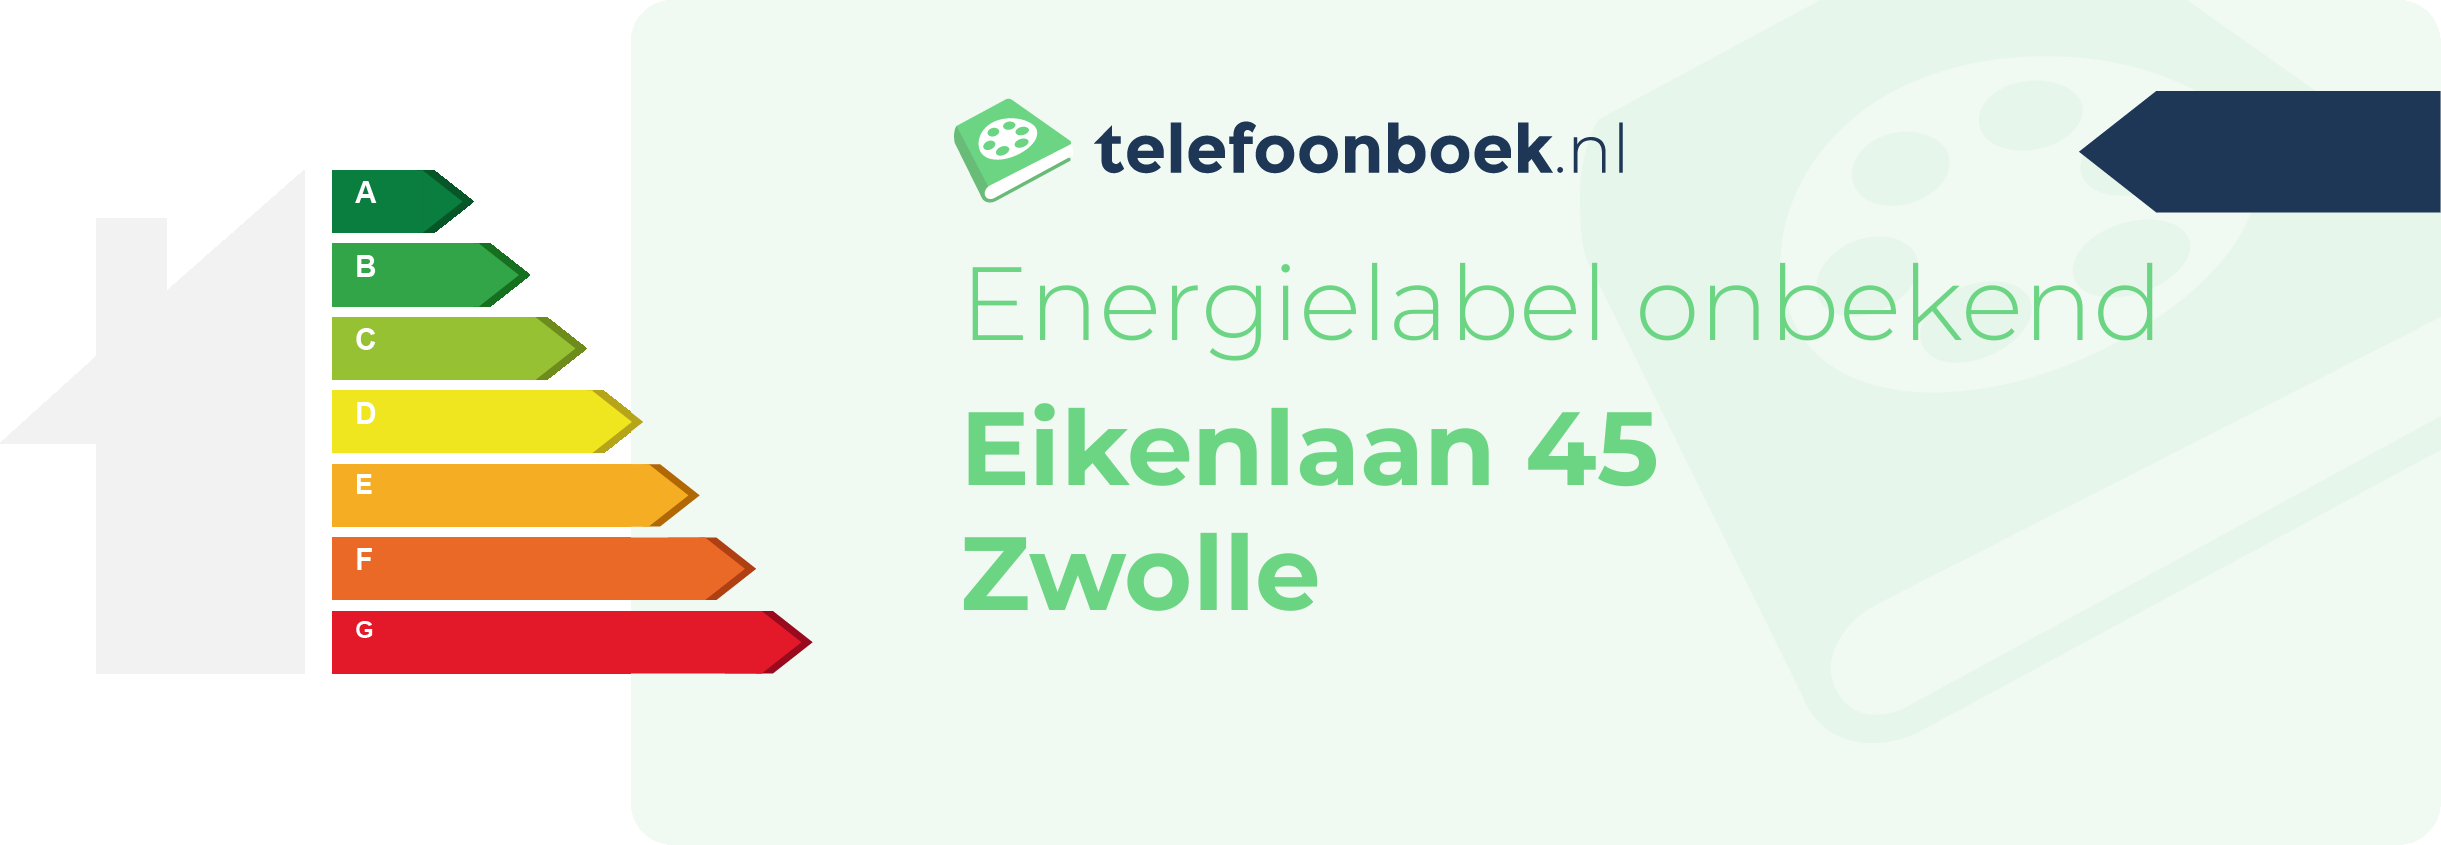 Energielabel Eikenlaan 45 Zwolle